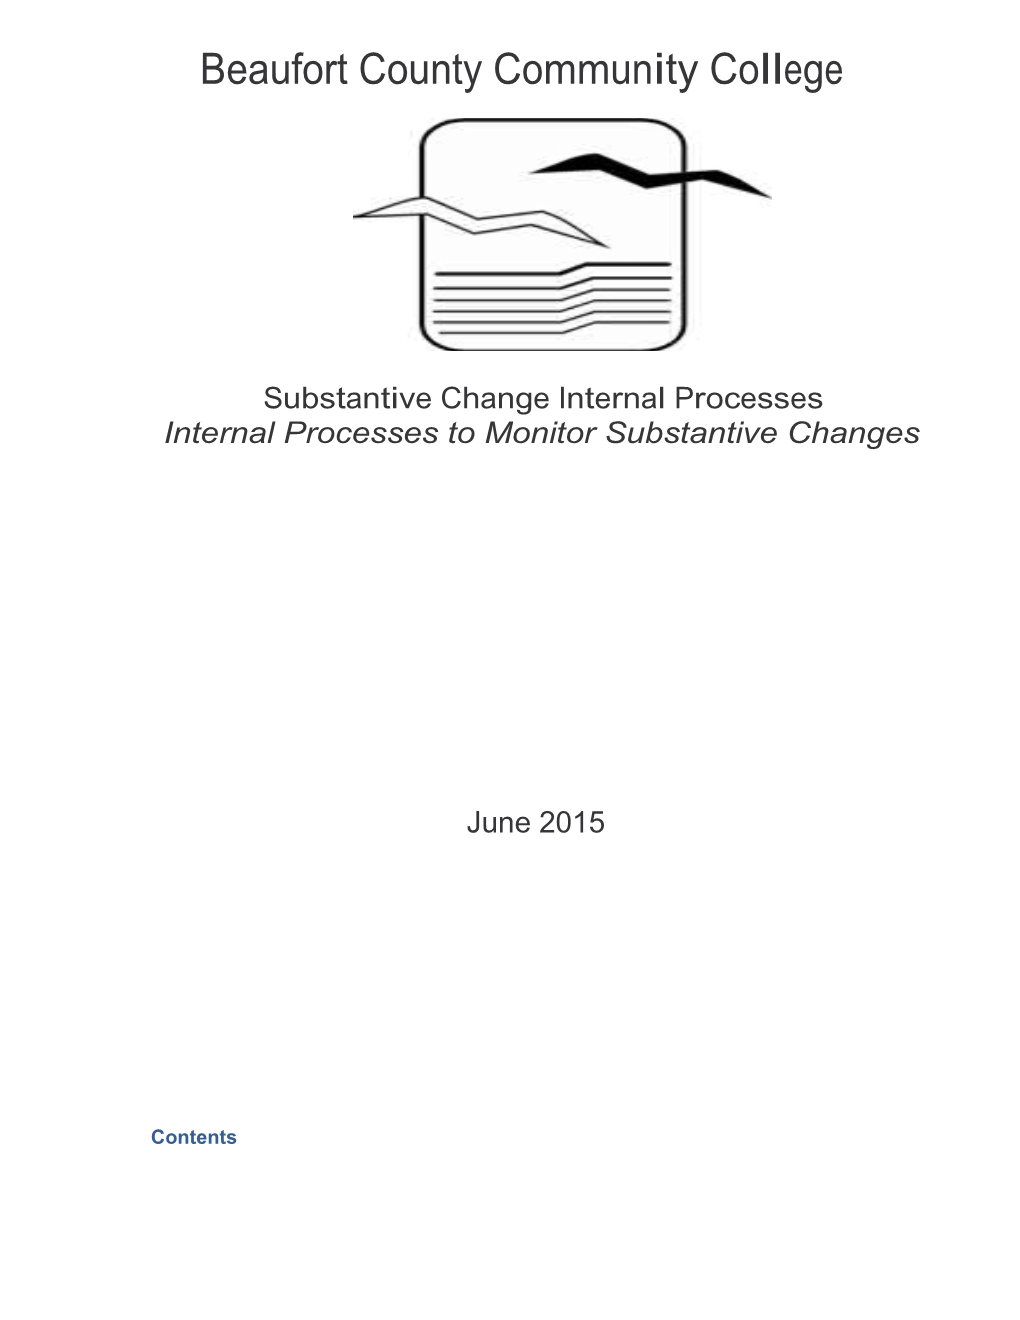 Substantive Change Document 1 10-6-08